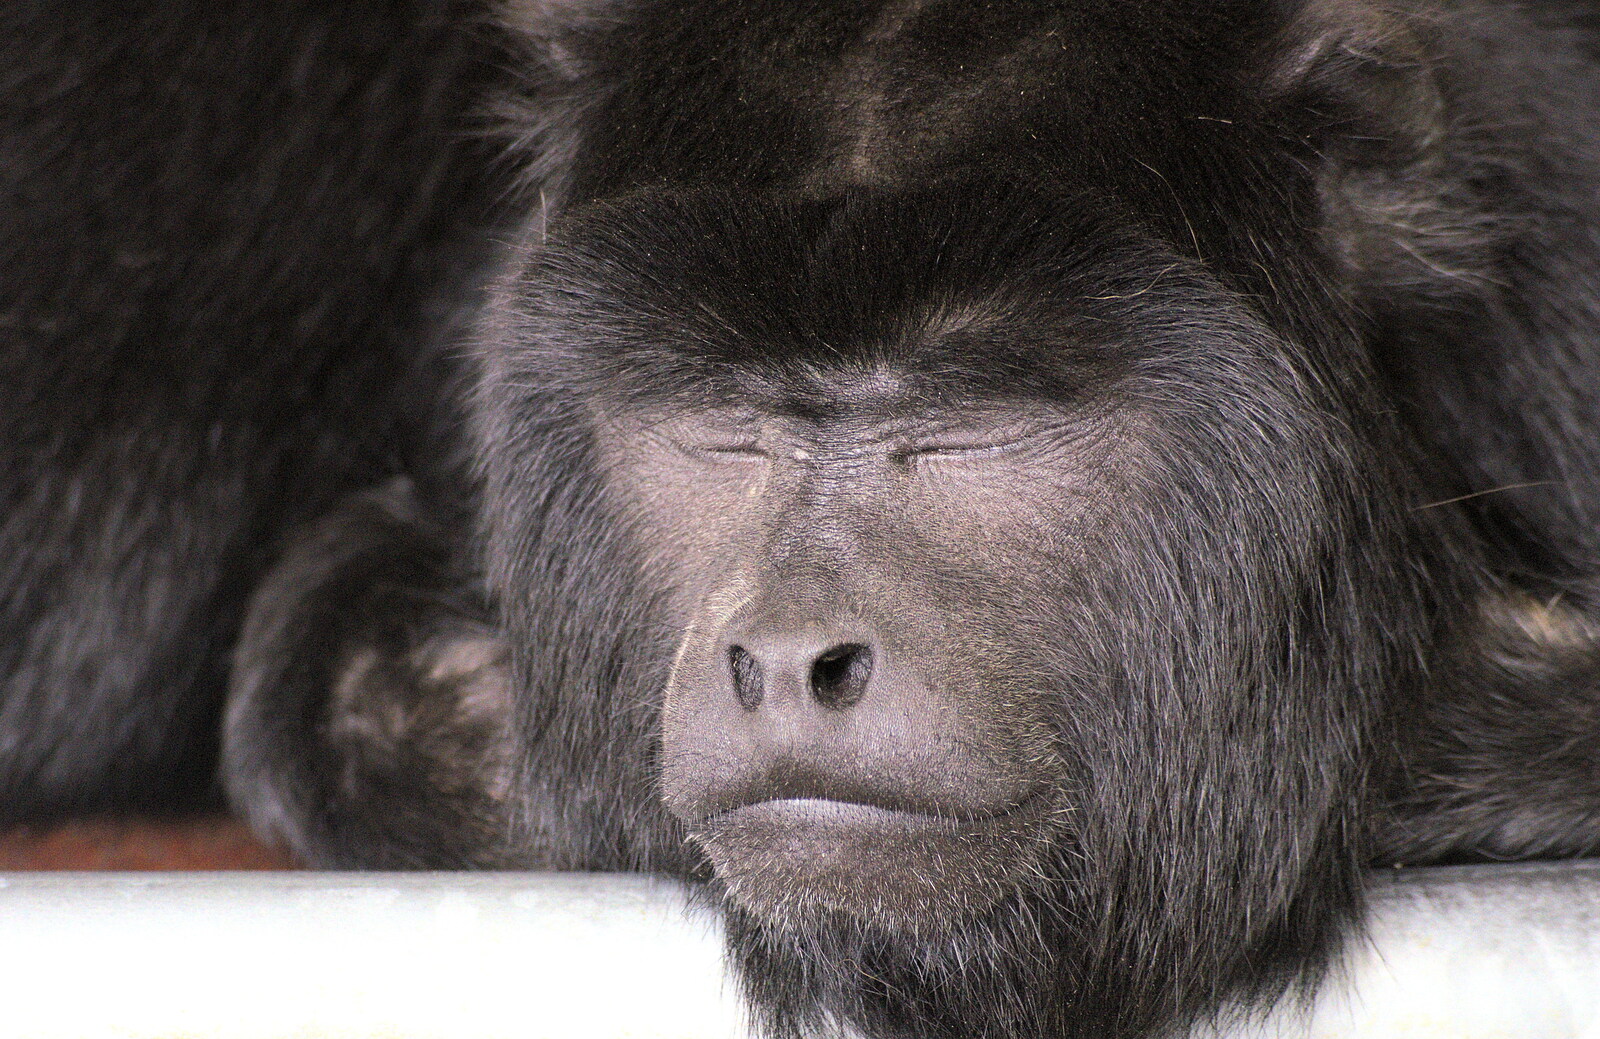 A sleepy ape from Tiger Cubs at Banham Zoo, Banham, Norfolk - 6th August 2013